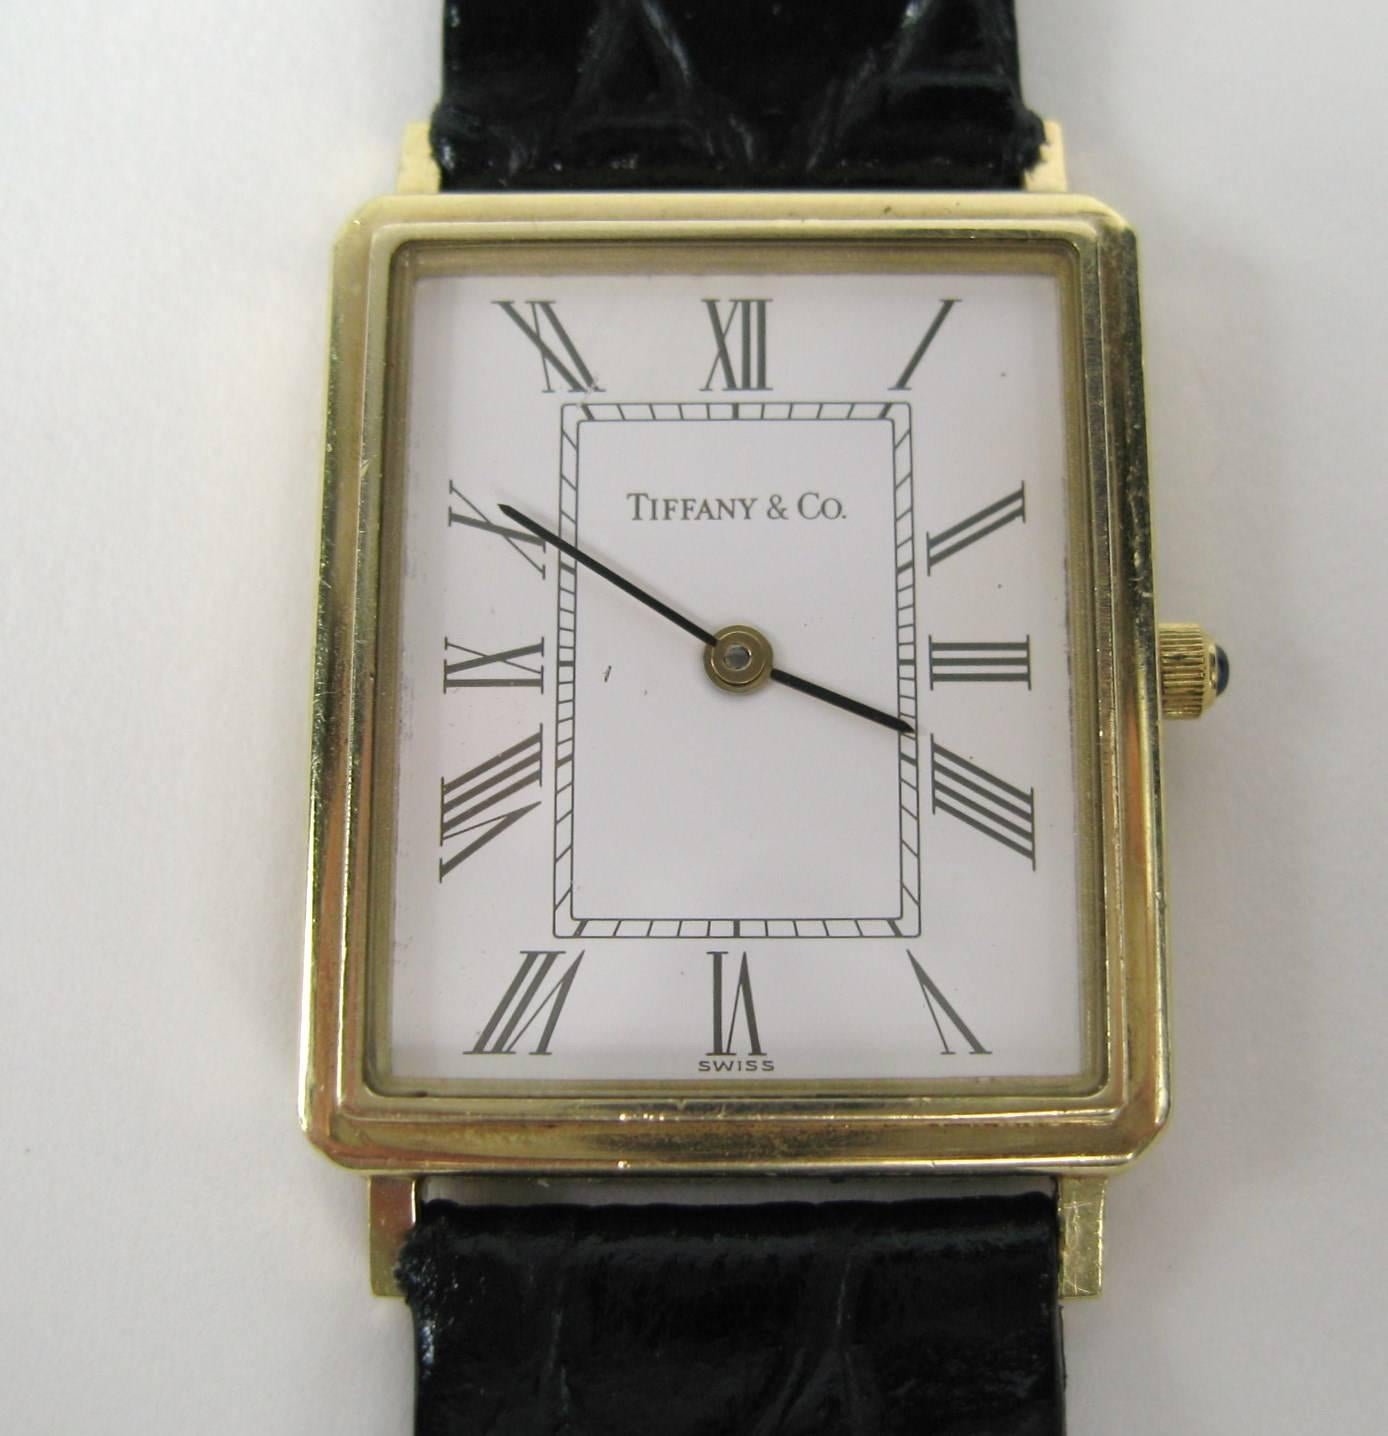 Sleek 14K Gold Tiffany Gold Watch
Measuring 35.37mm or  1.39